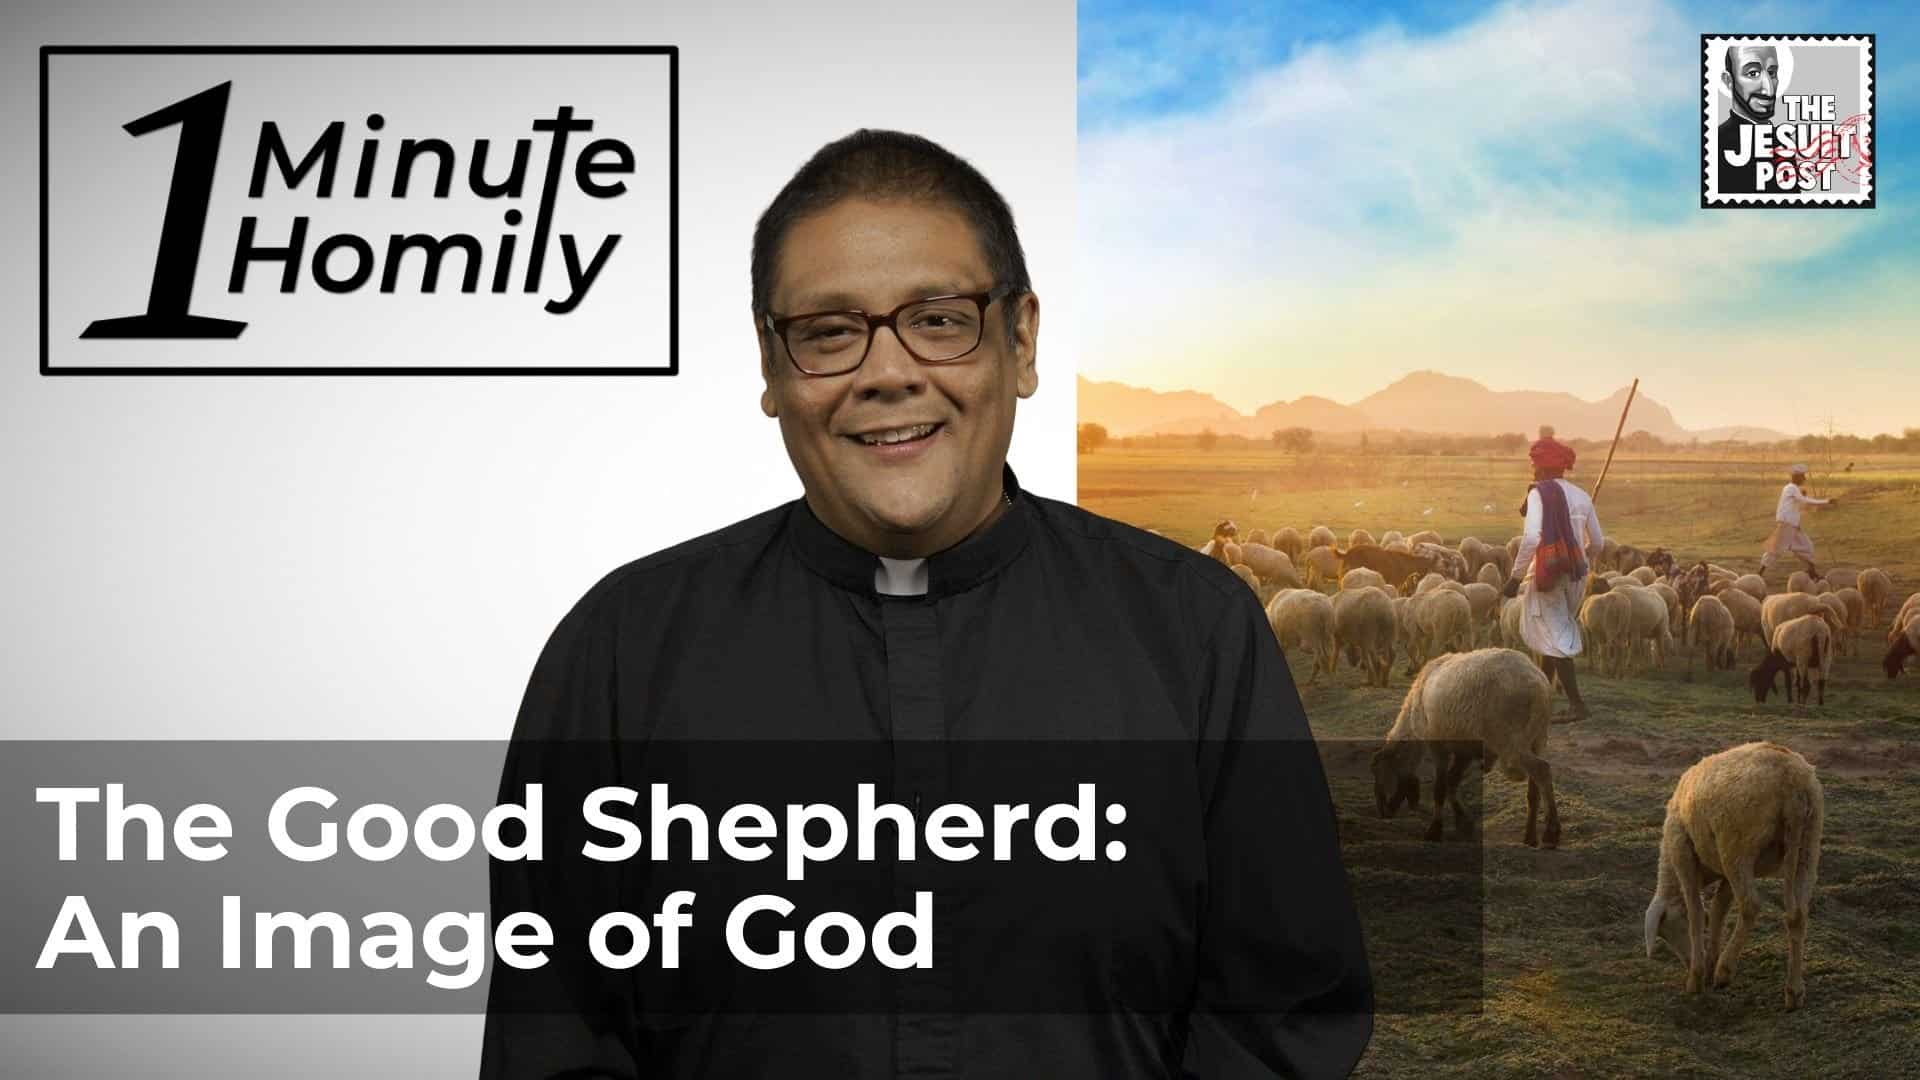 the voice of the shepherd